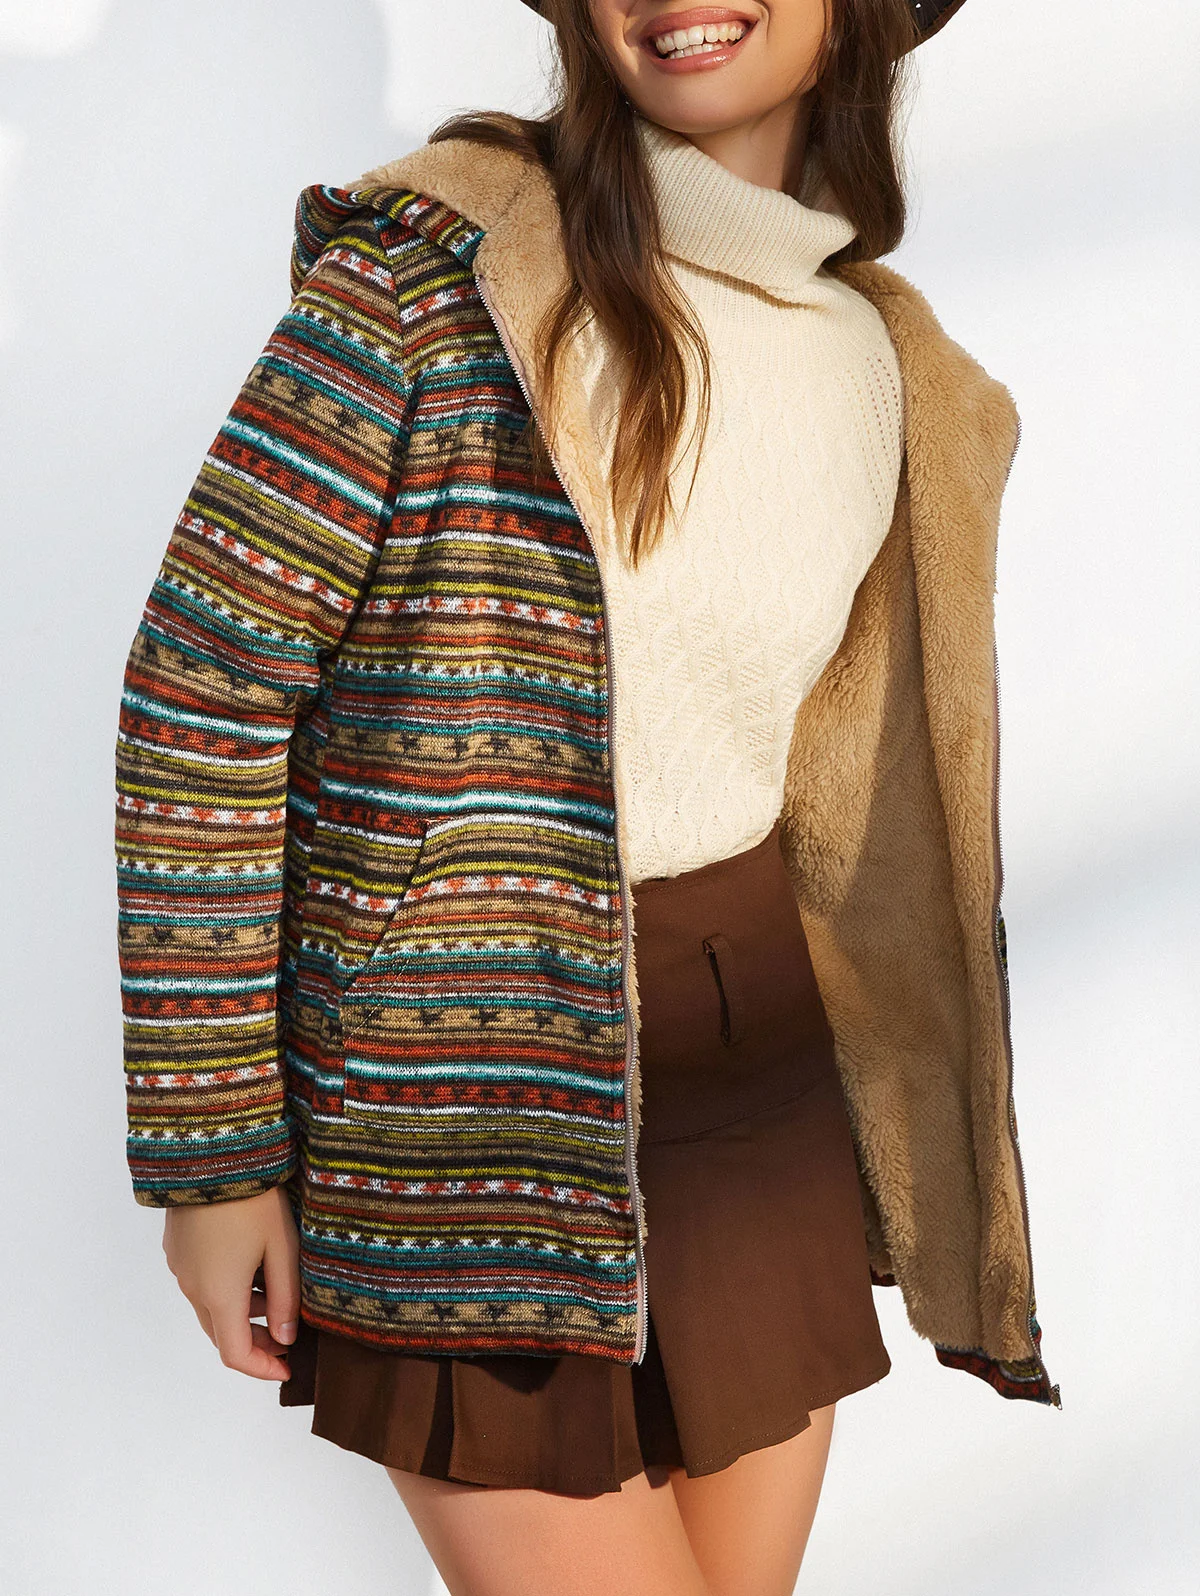 

ZAFUL Ethnic Print Faux Fur Lined Hooded Zip Coat Female Long Fuzzy Jacket Winter Clothes Women Outerwear